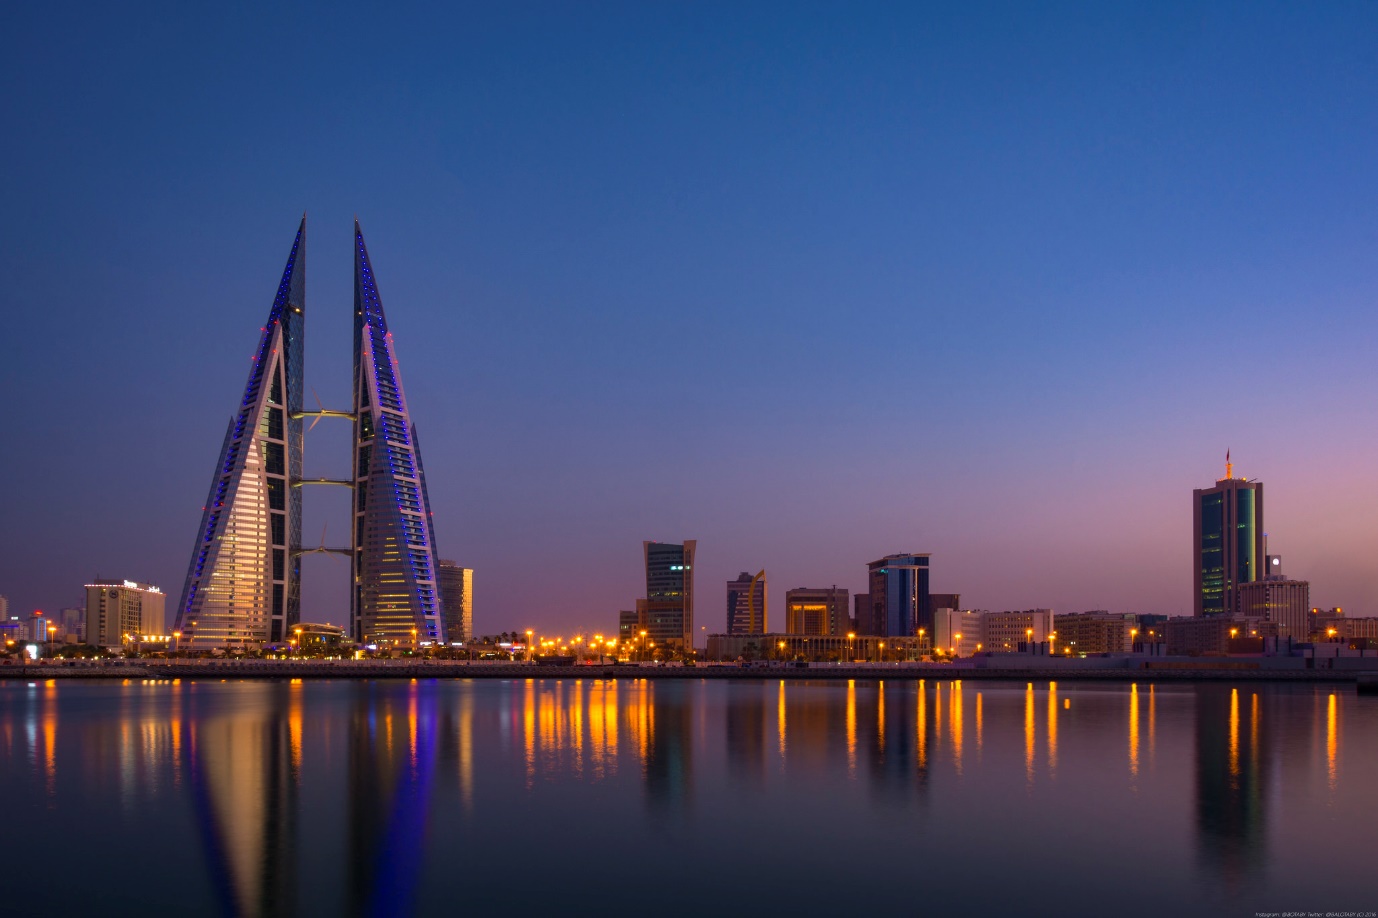 Bahrain - The Middle East’s Best Kept Secret